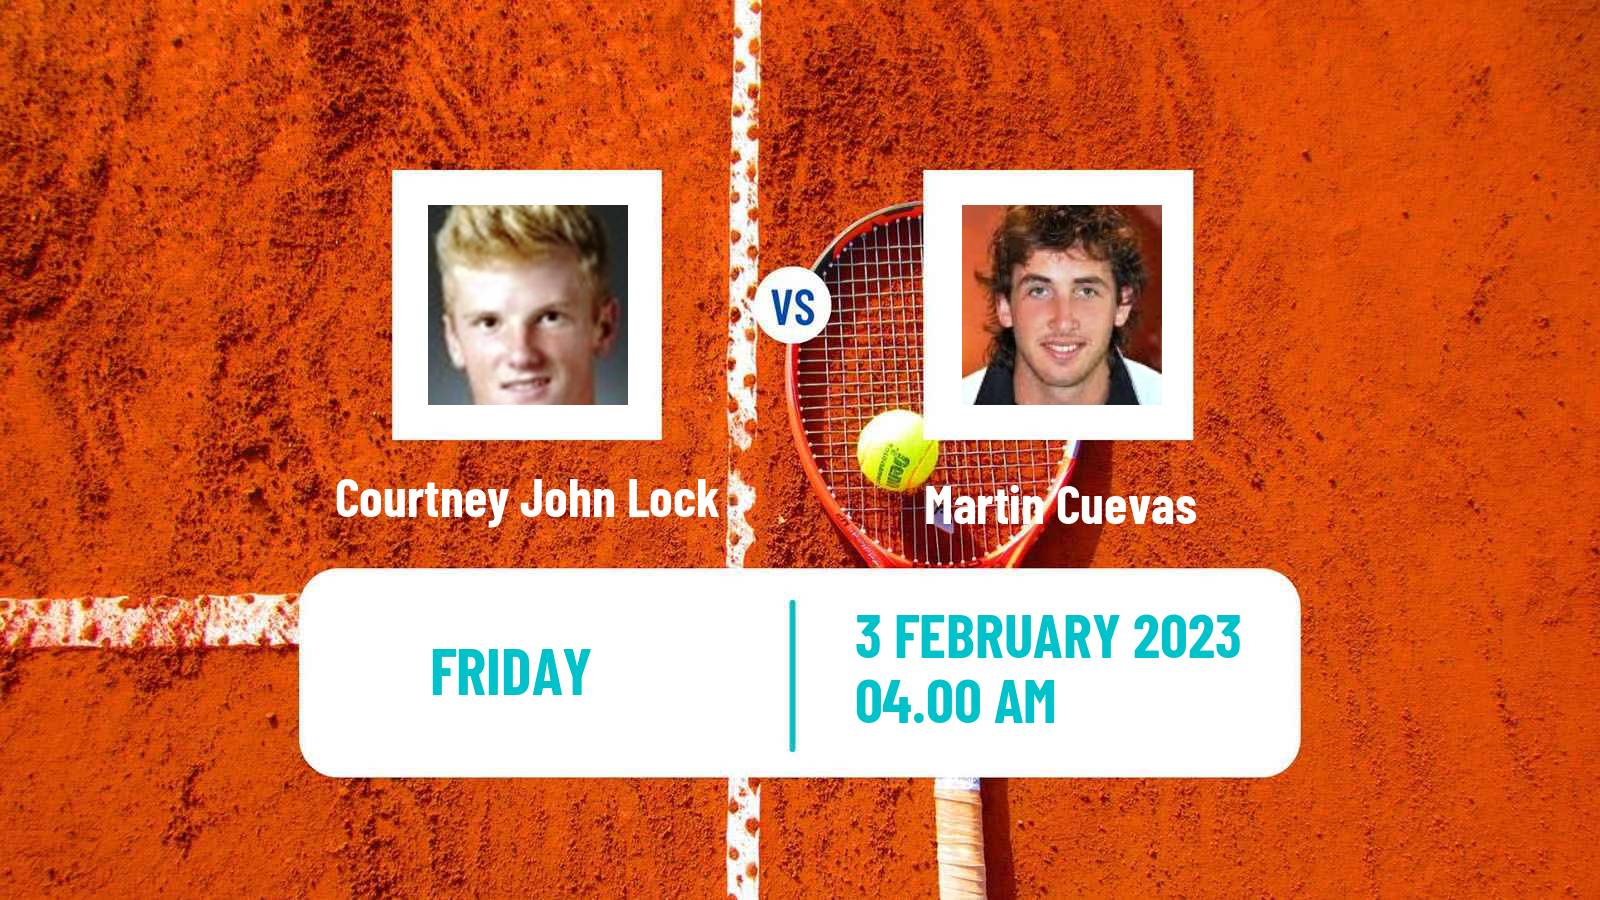 Tennis Davis Cup World Group II Courtney John Lock - Martin Cuevas